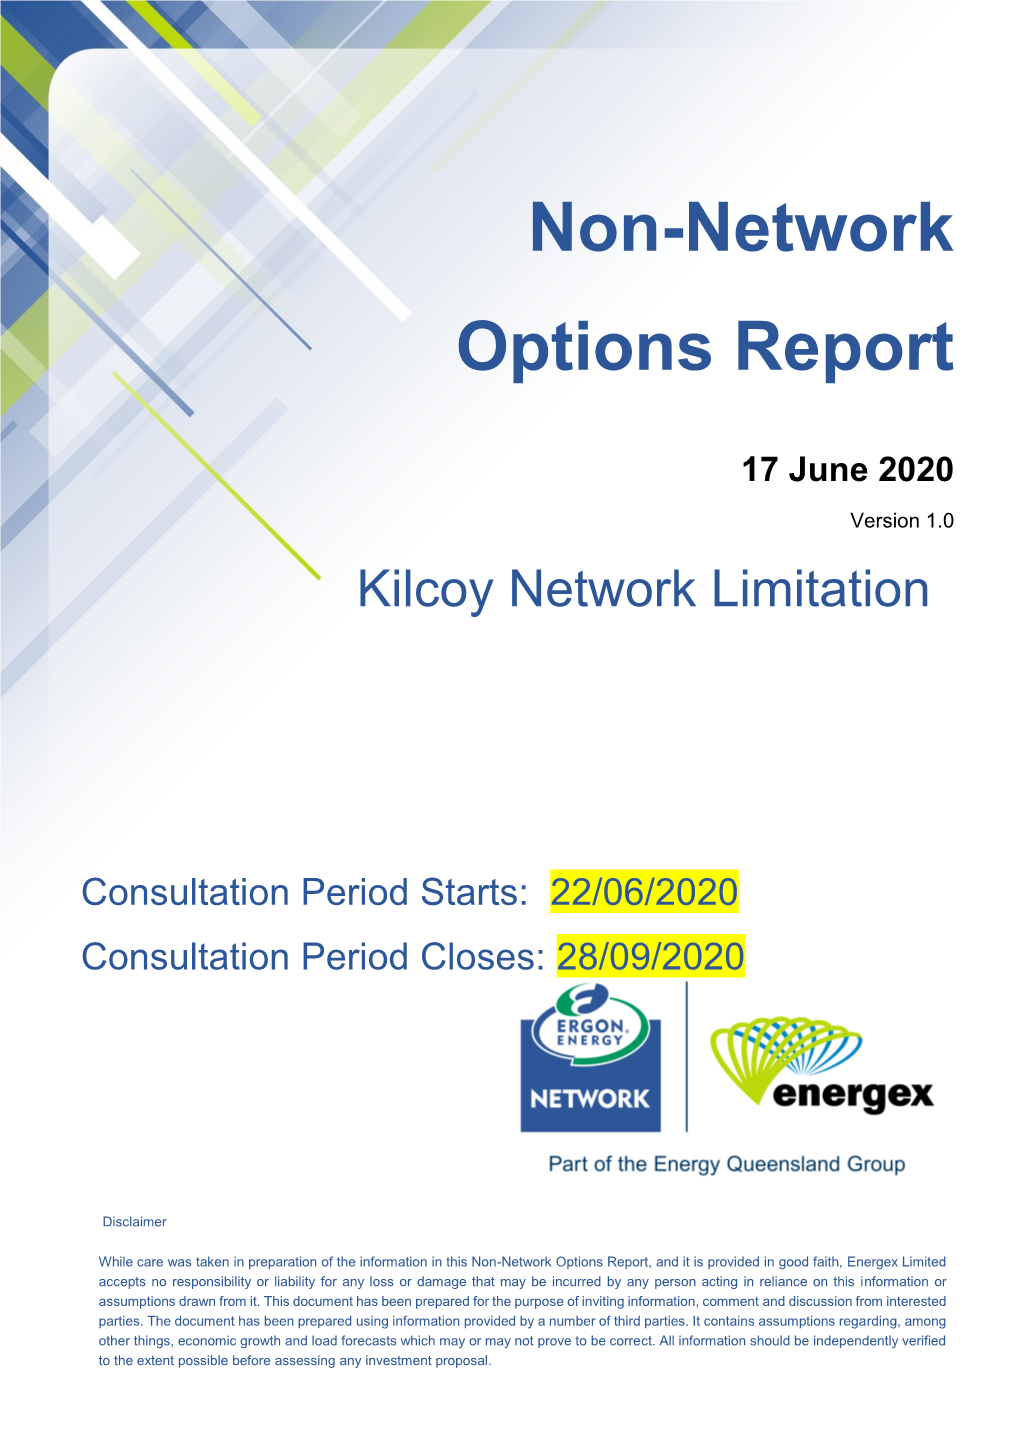 Non-Network Options Report